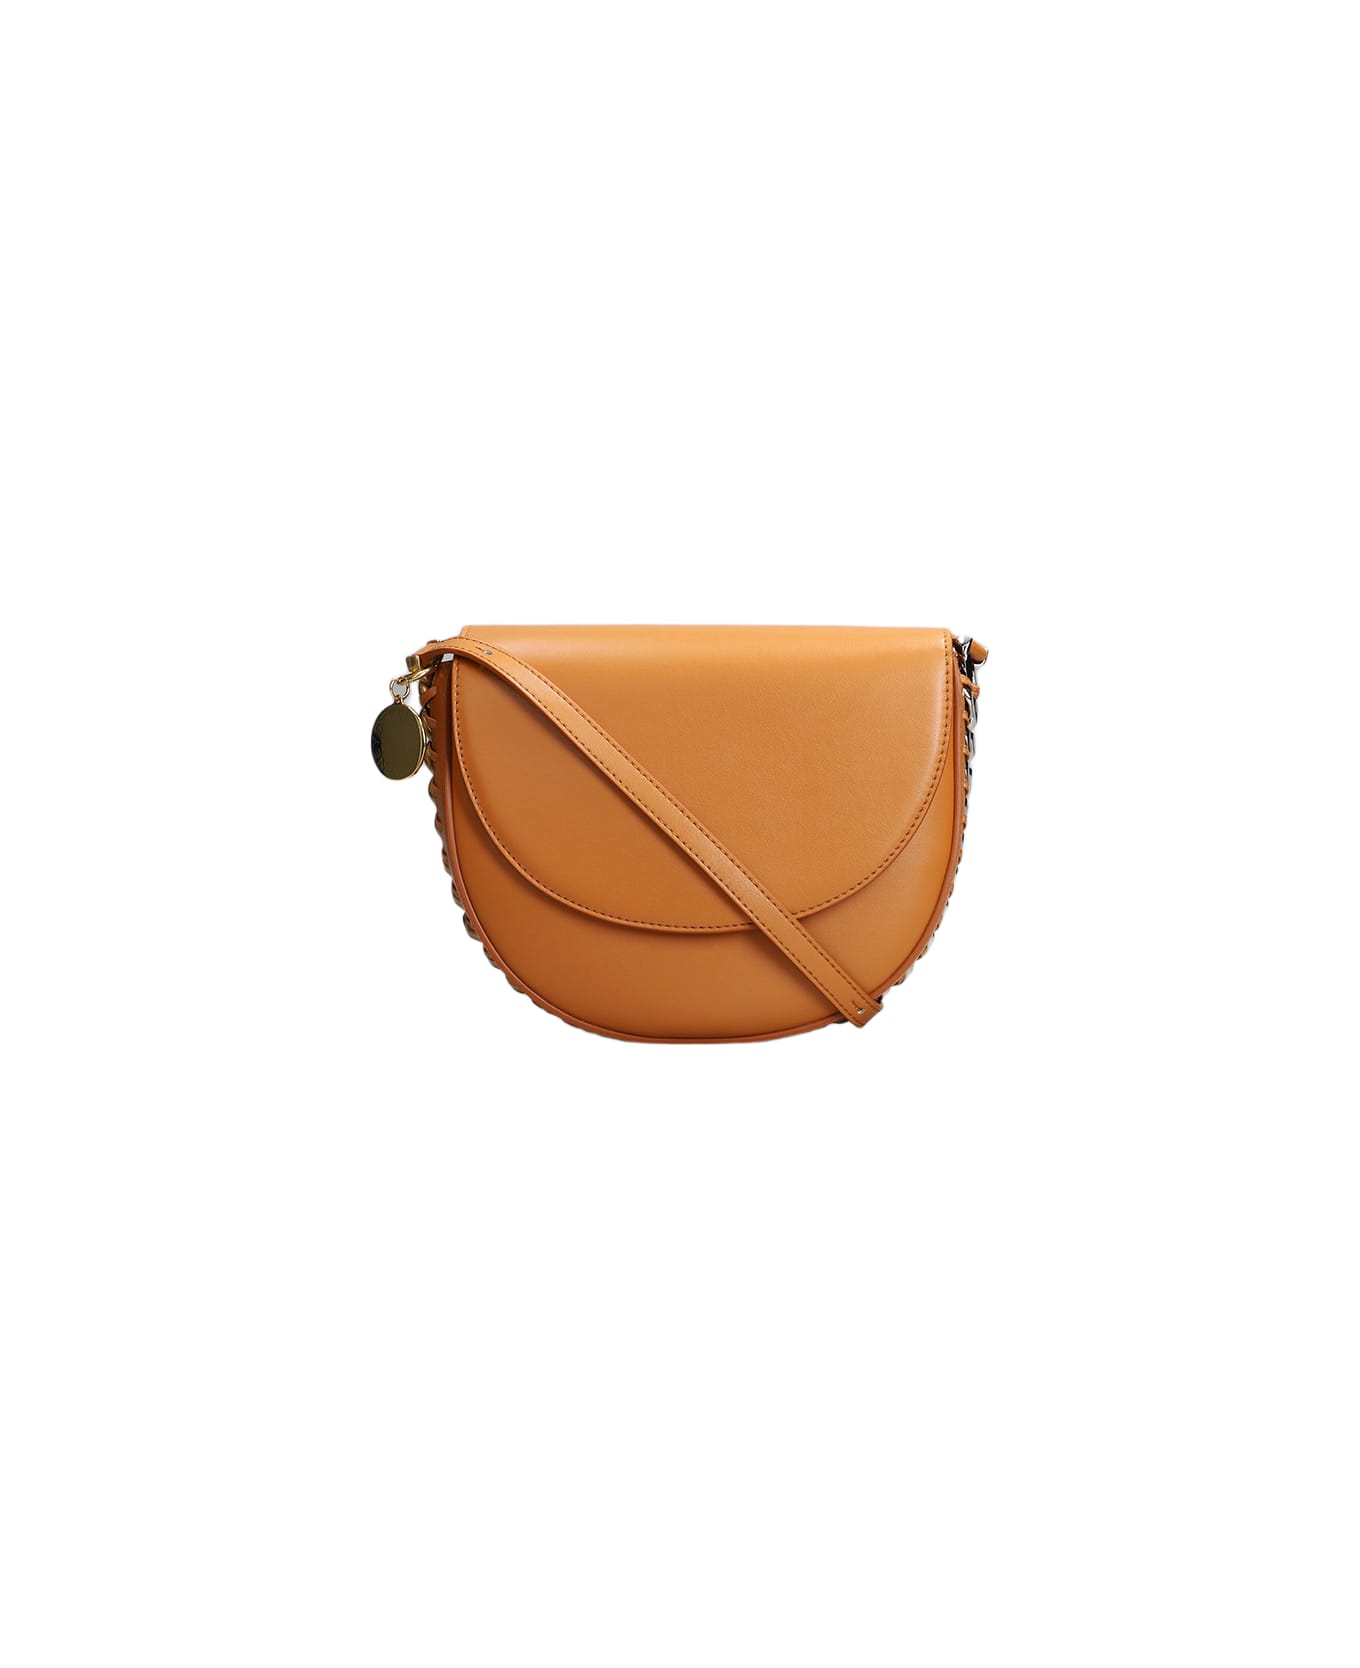 Stella McCartney Alter Mat Shoulder Bag In Orange Faux Leather - Cuoio トートバッグ